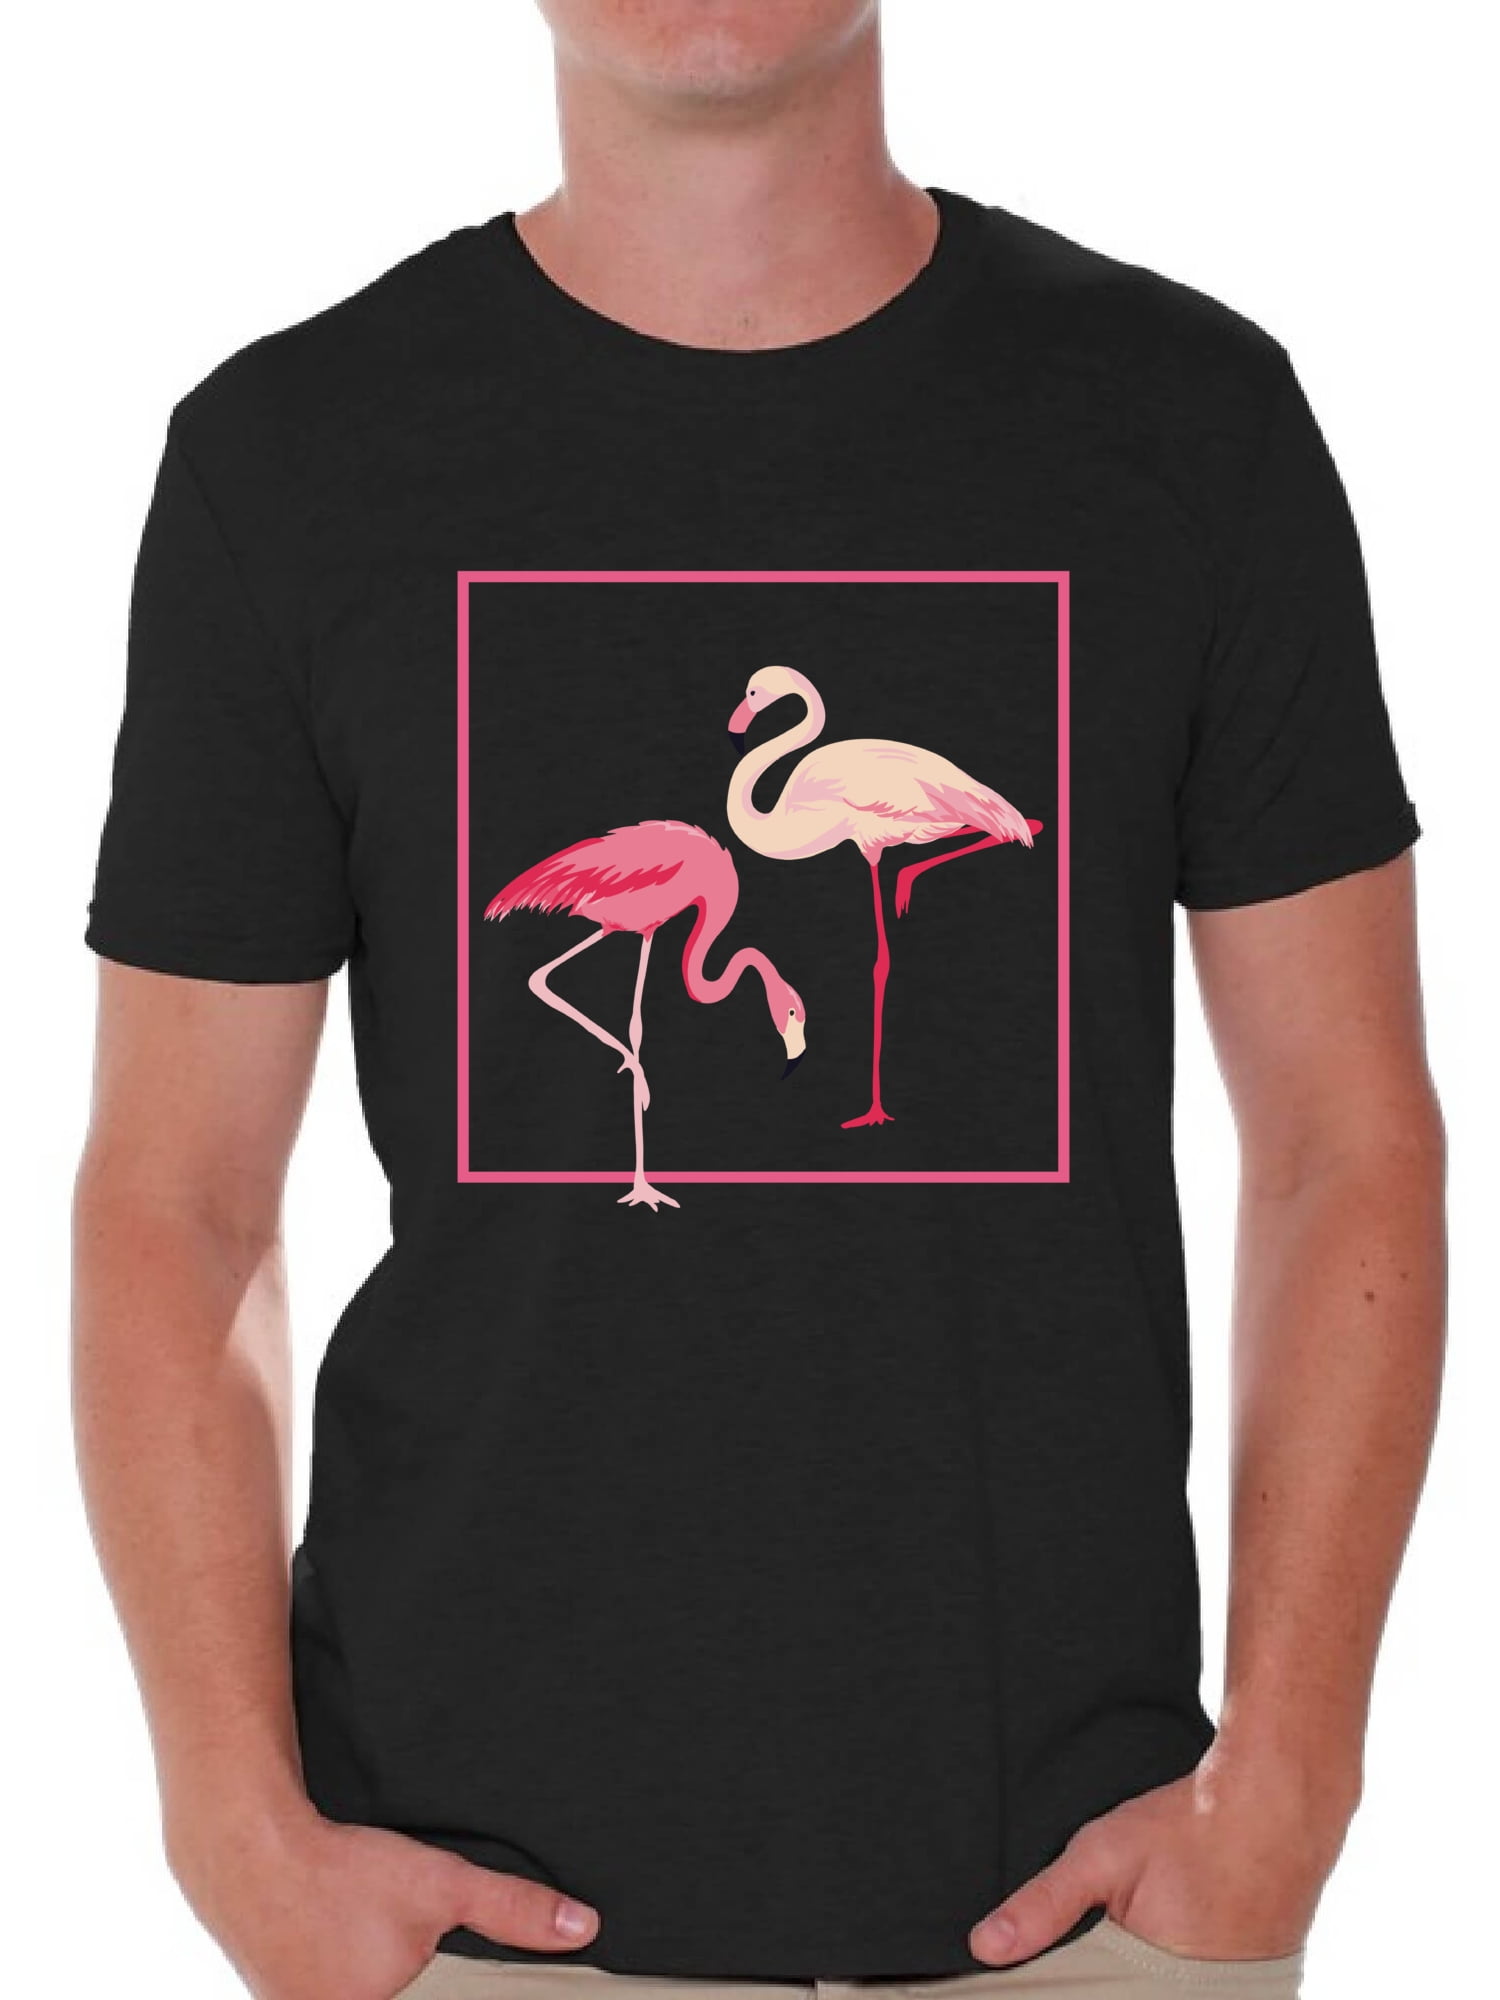 Awkward Styles Flamingo Love Tshirt for Men Vintage Flamingo Shirt ...